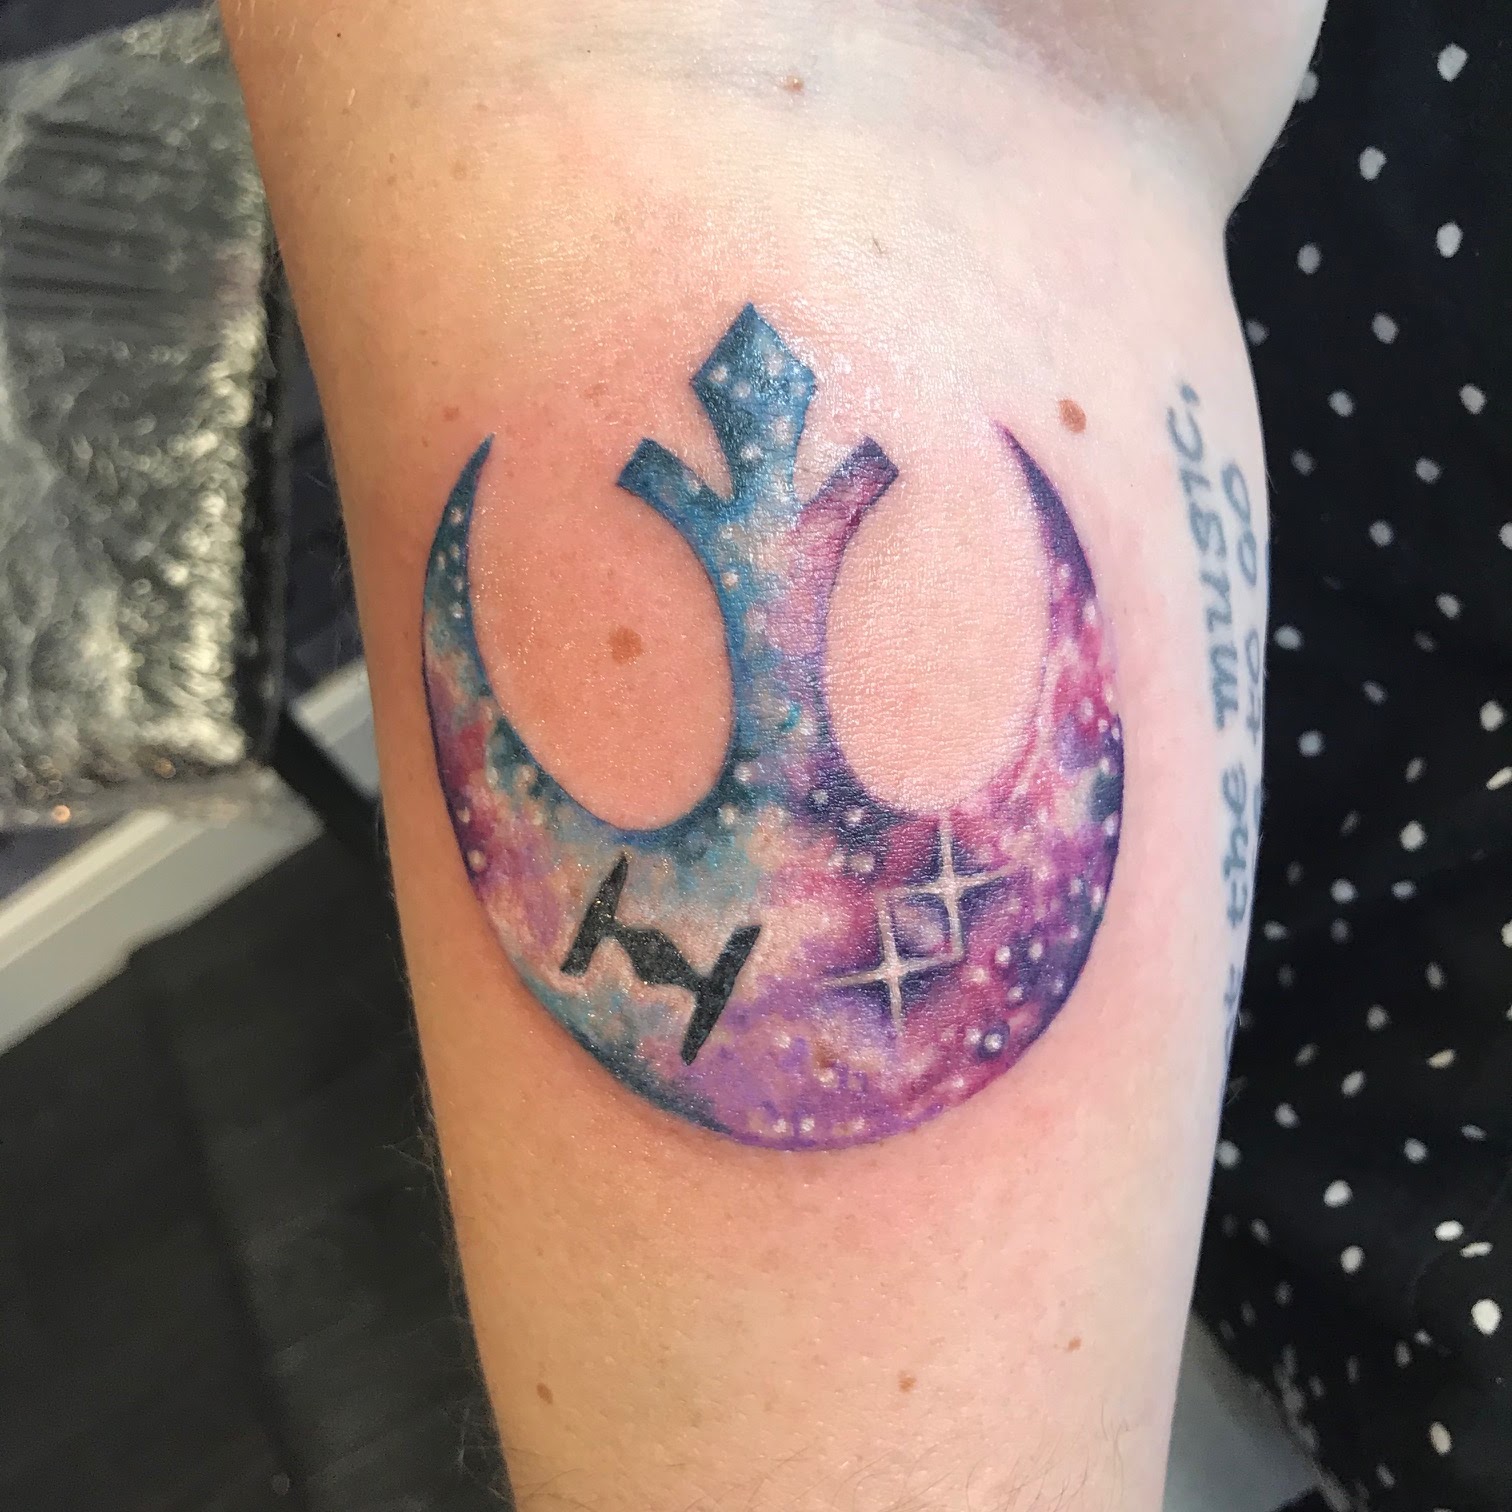 Rebel Alliance Star Wars Tattoo by Stormpod on DeviantArt